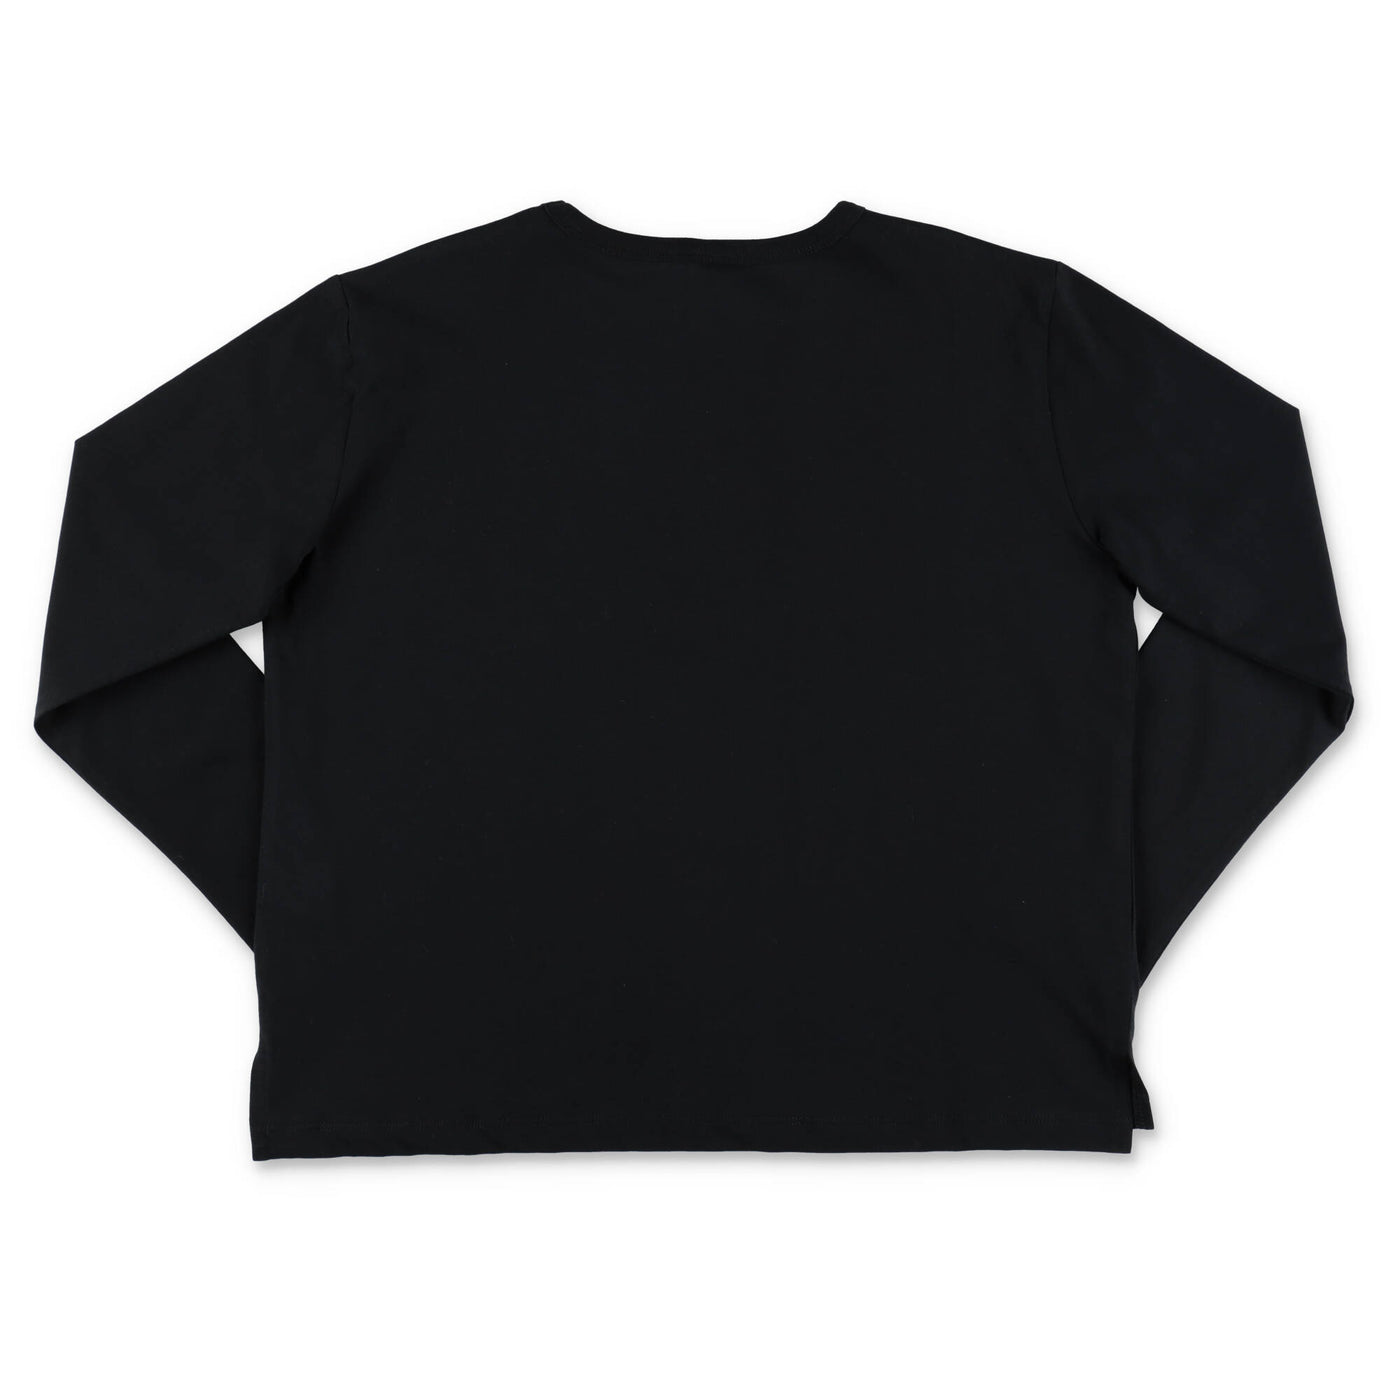 Black cotton jersey girl STELLA McCARTNEY t-shirt | Carofiglio Junior